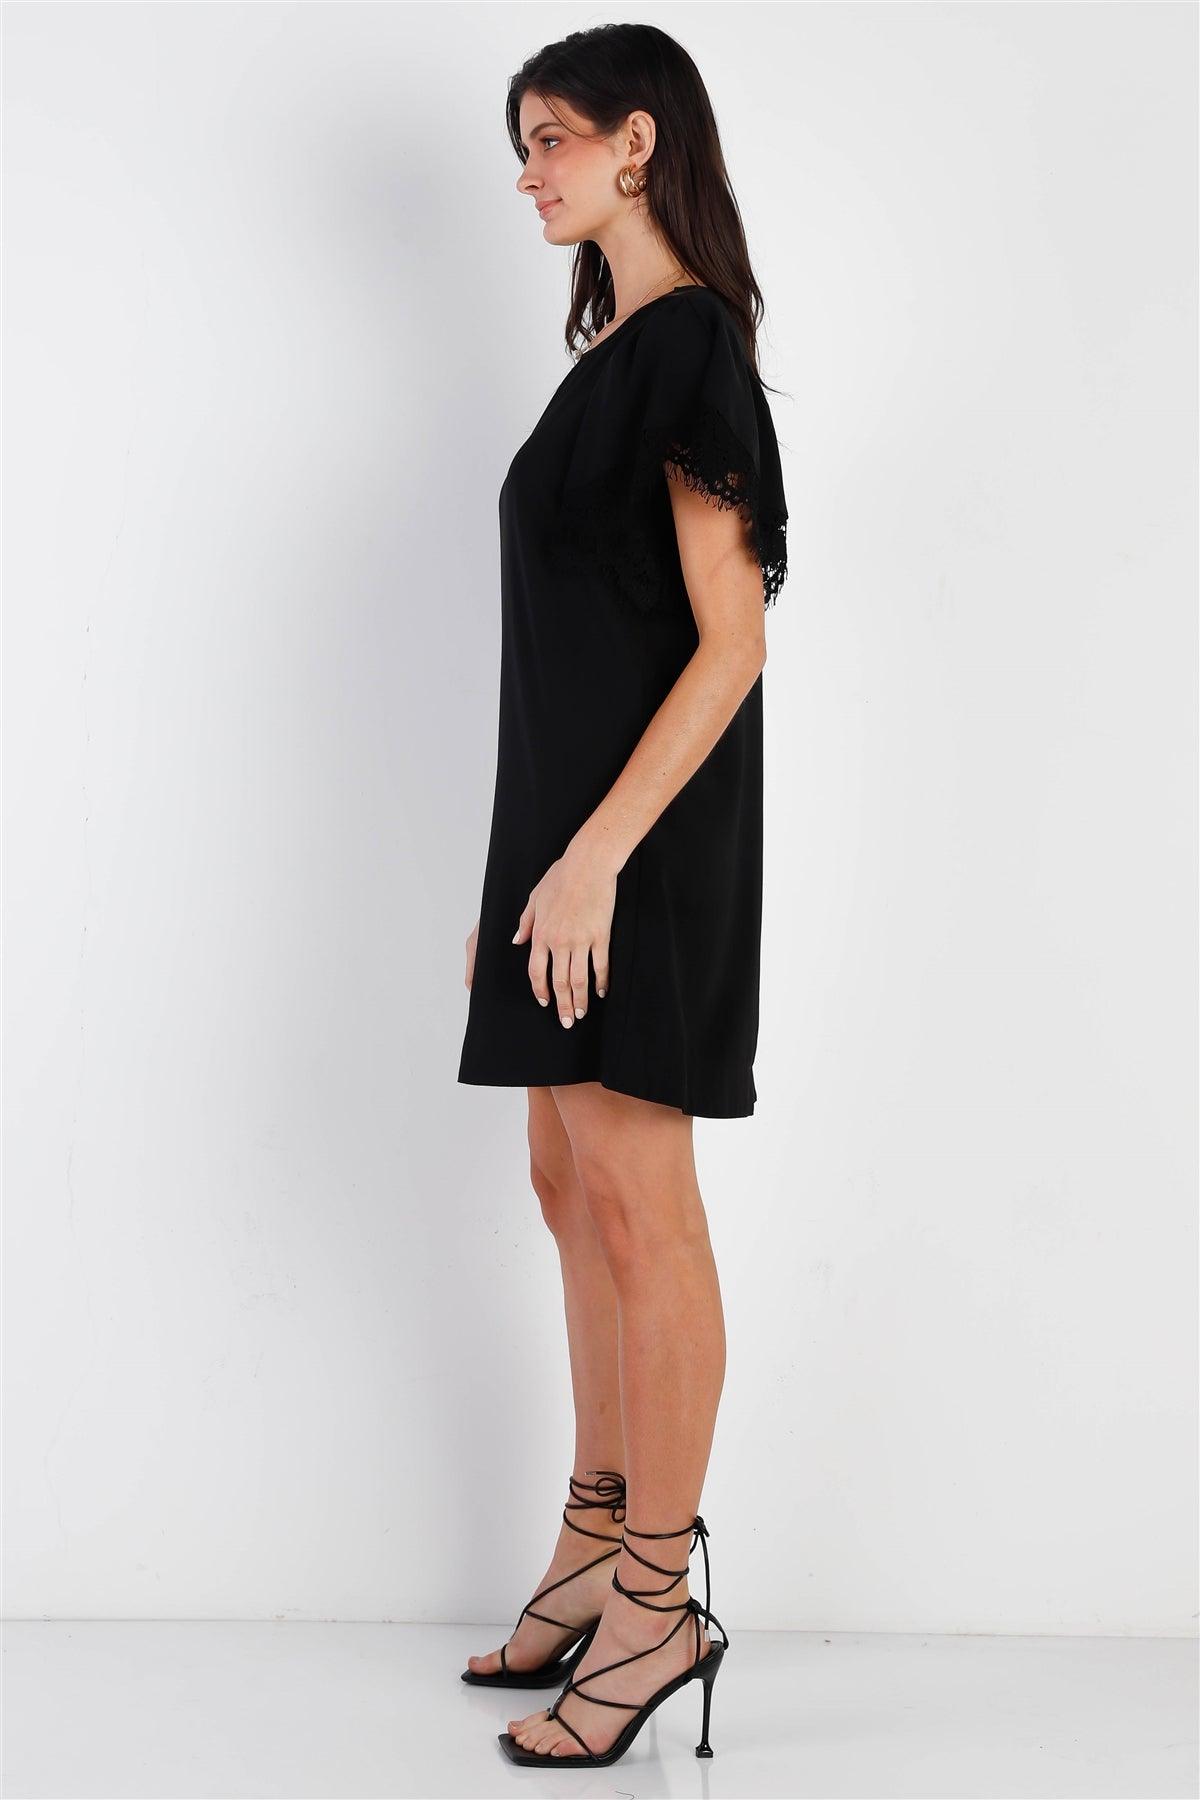 Black Relax Fit Lace Hem Wing Sleeve Round Neck Mini Dress /1-2-2-1